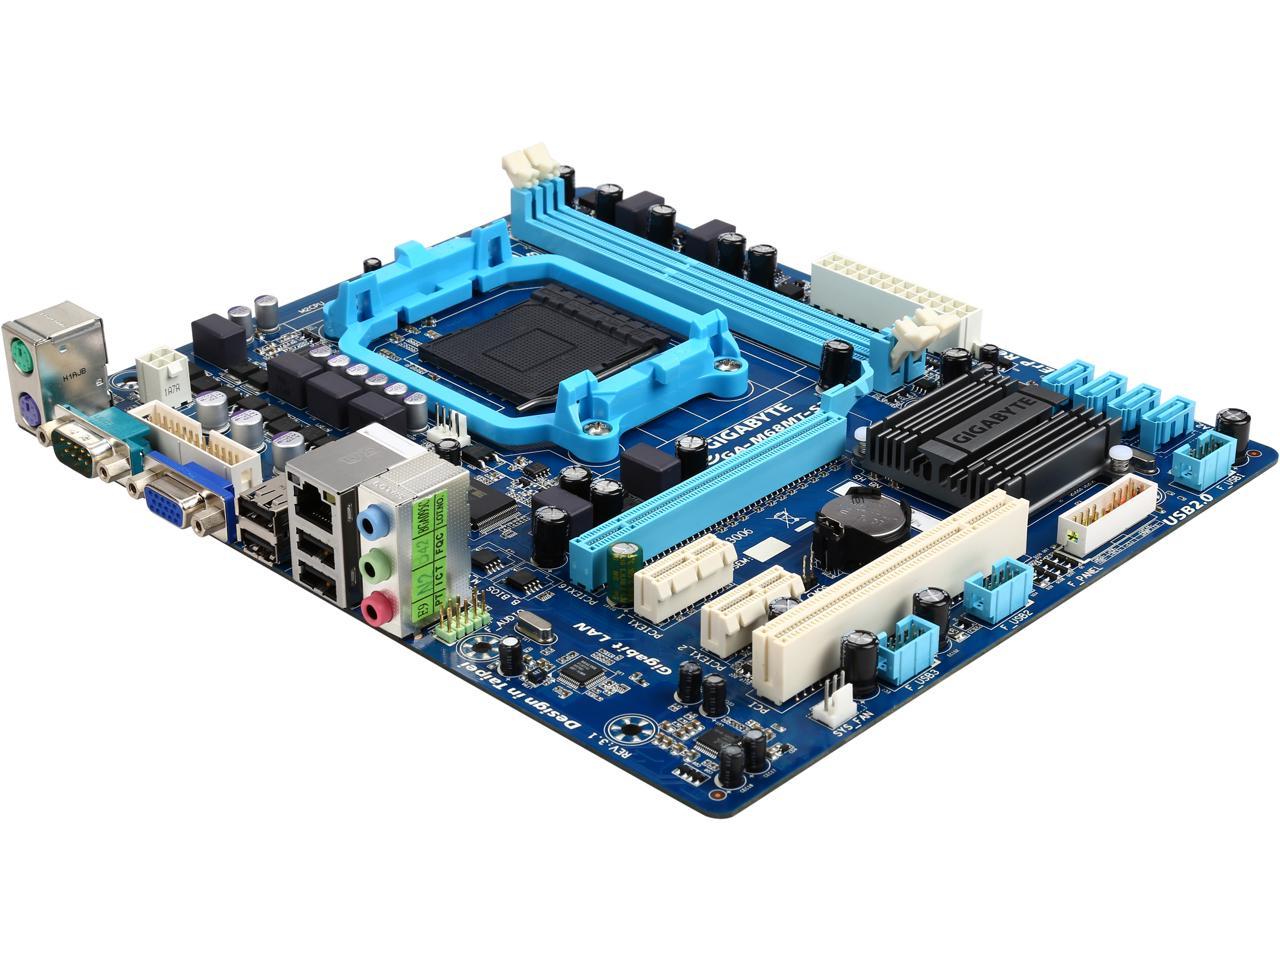 GIGABYTE GA-M68MT-S2P AM3 NVIDIA GeForce 7025/nForce 630a chipset Micro ATX AMD Motherboard